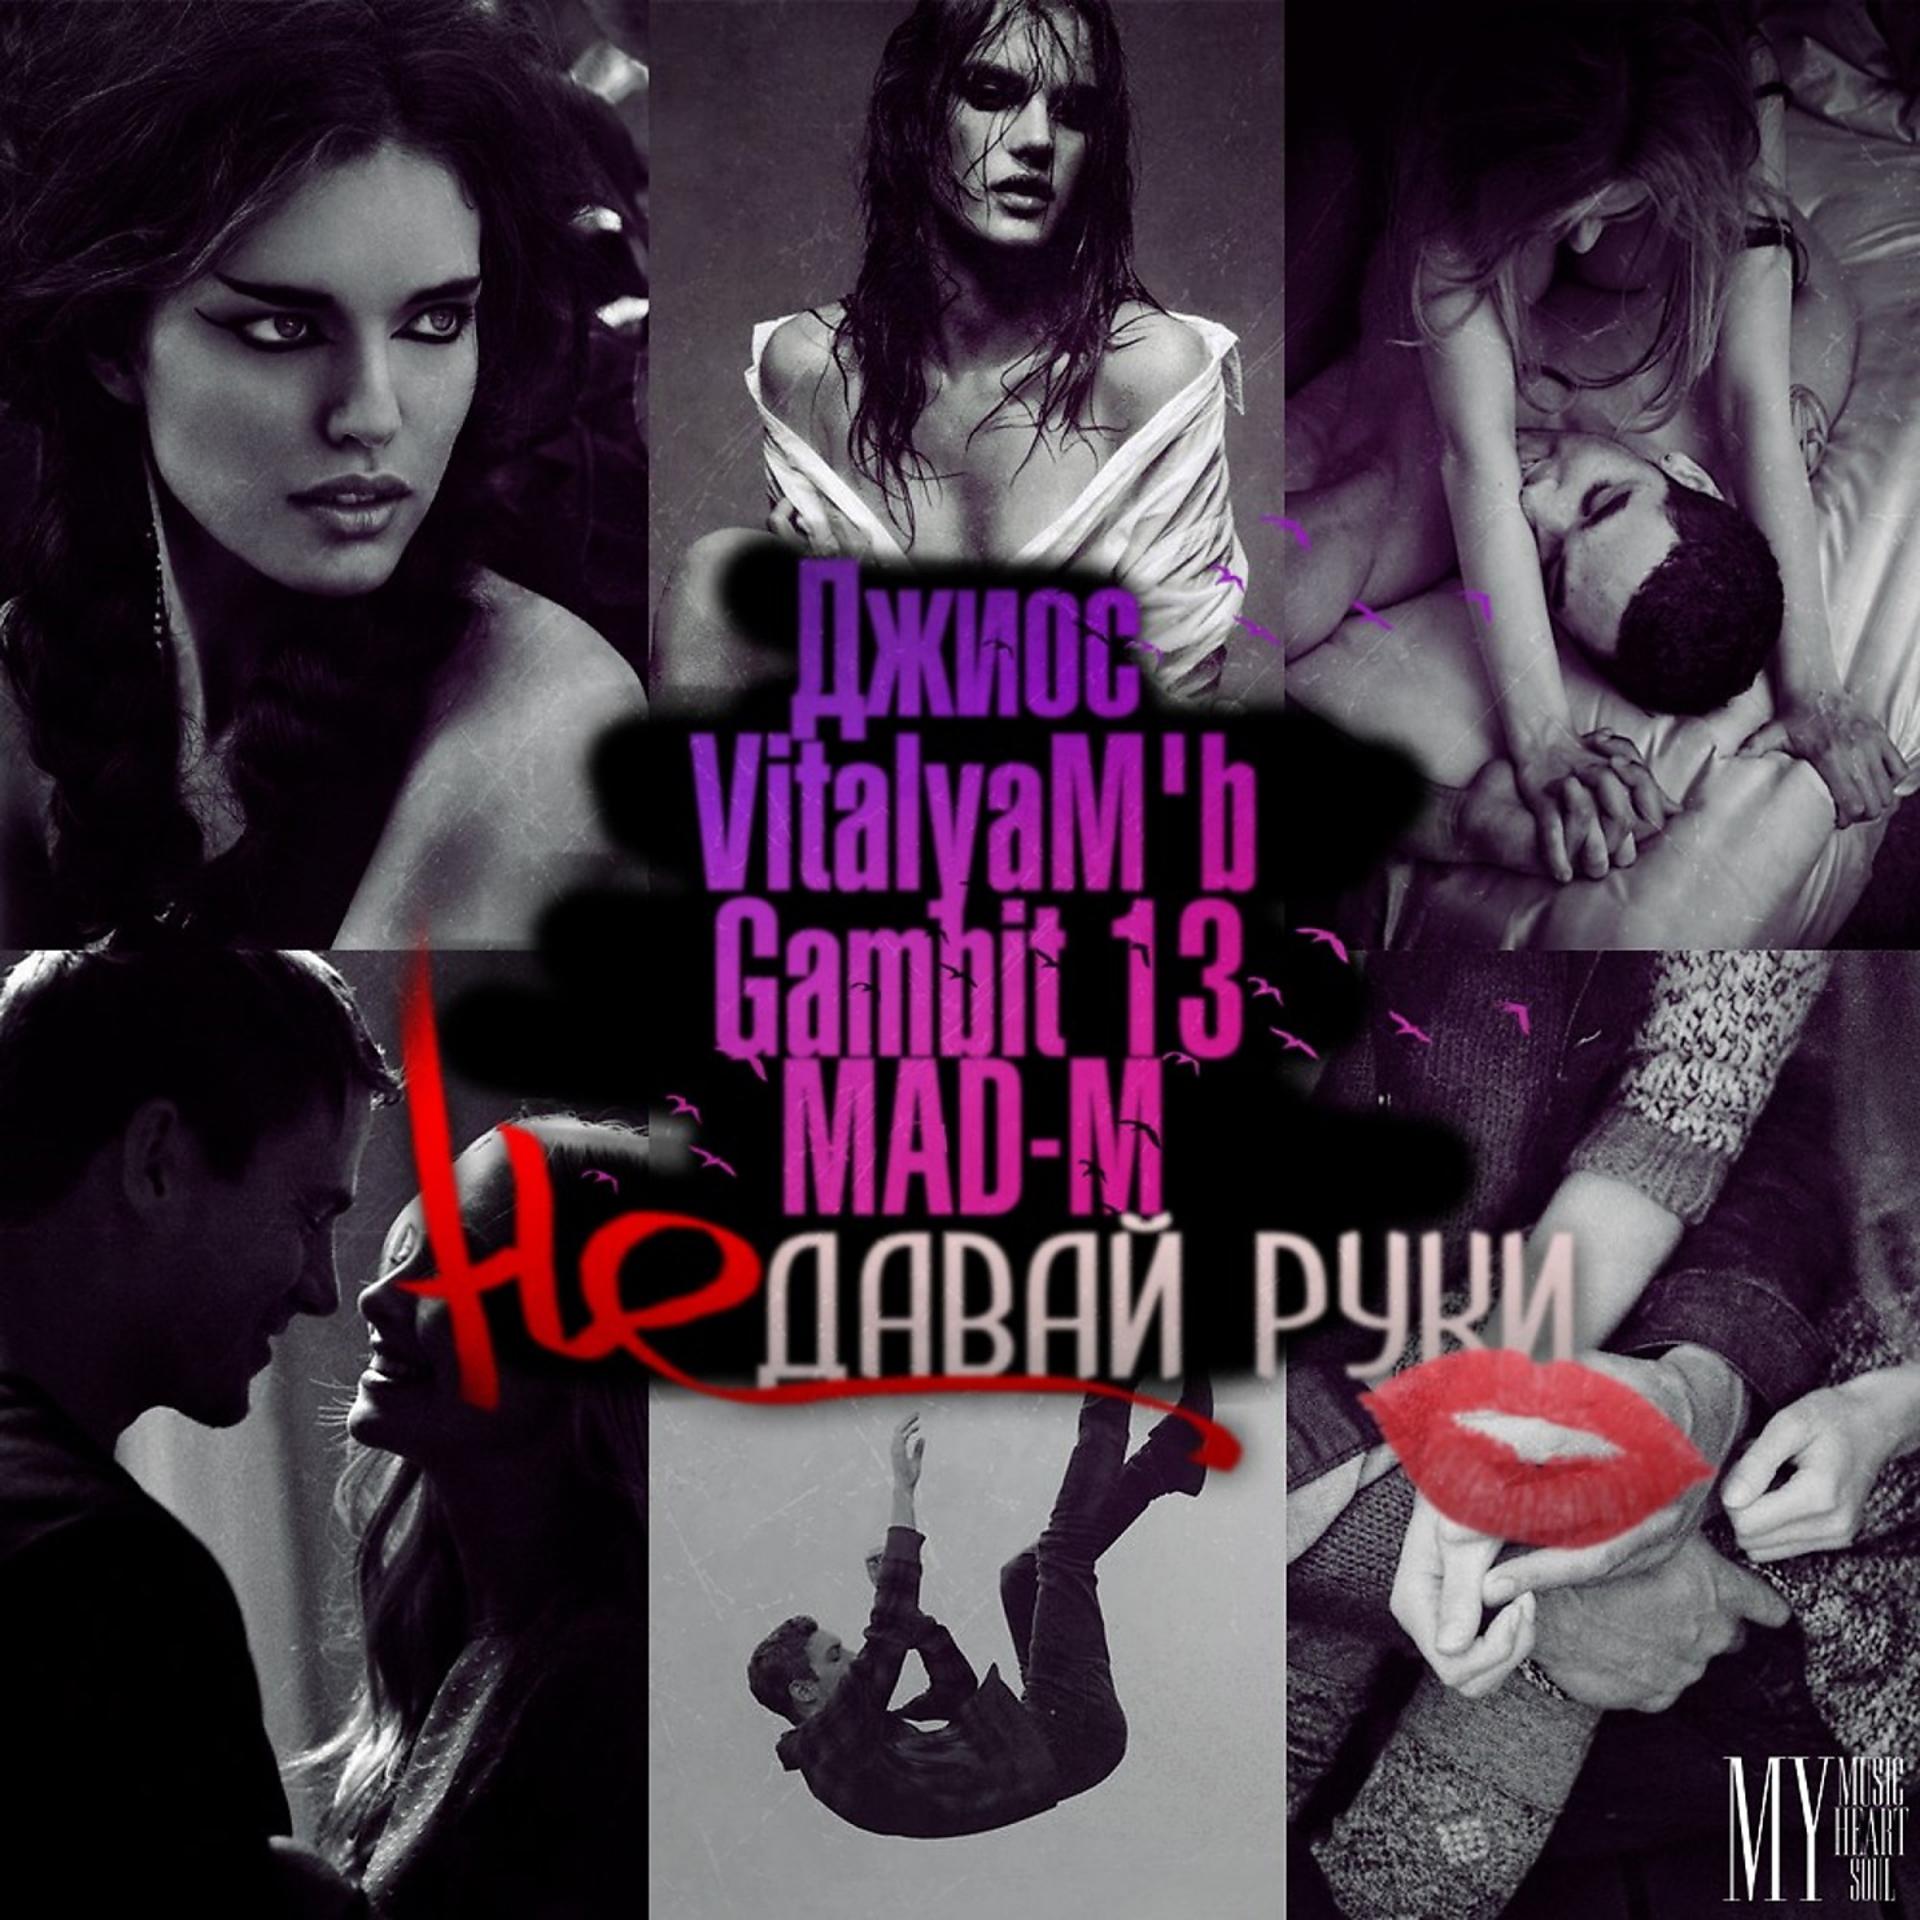 Постер к треку Джиос, Gambit 13, Vitalyam'b, MAD-M - Не давай руки